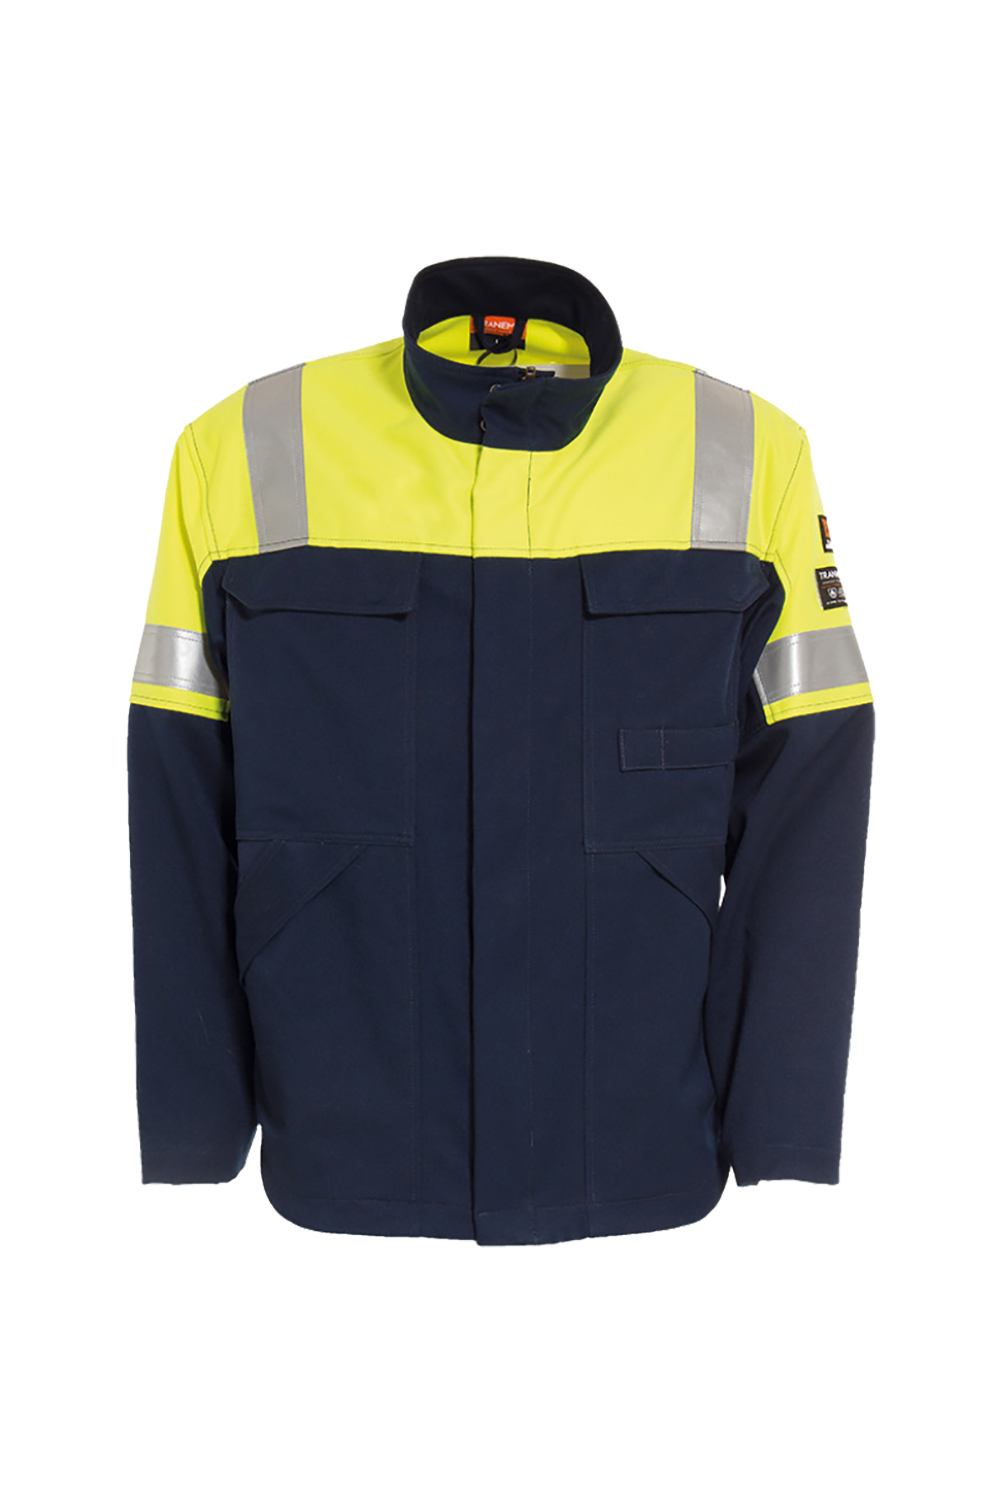   Magma FR Jacket 5636 87 / Tranemo / Workwear